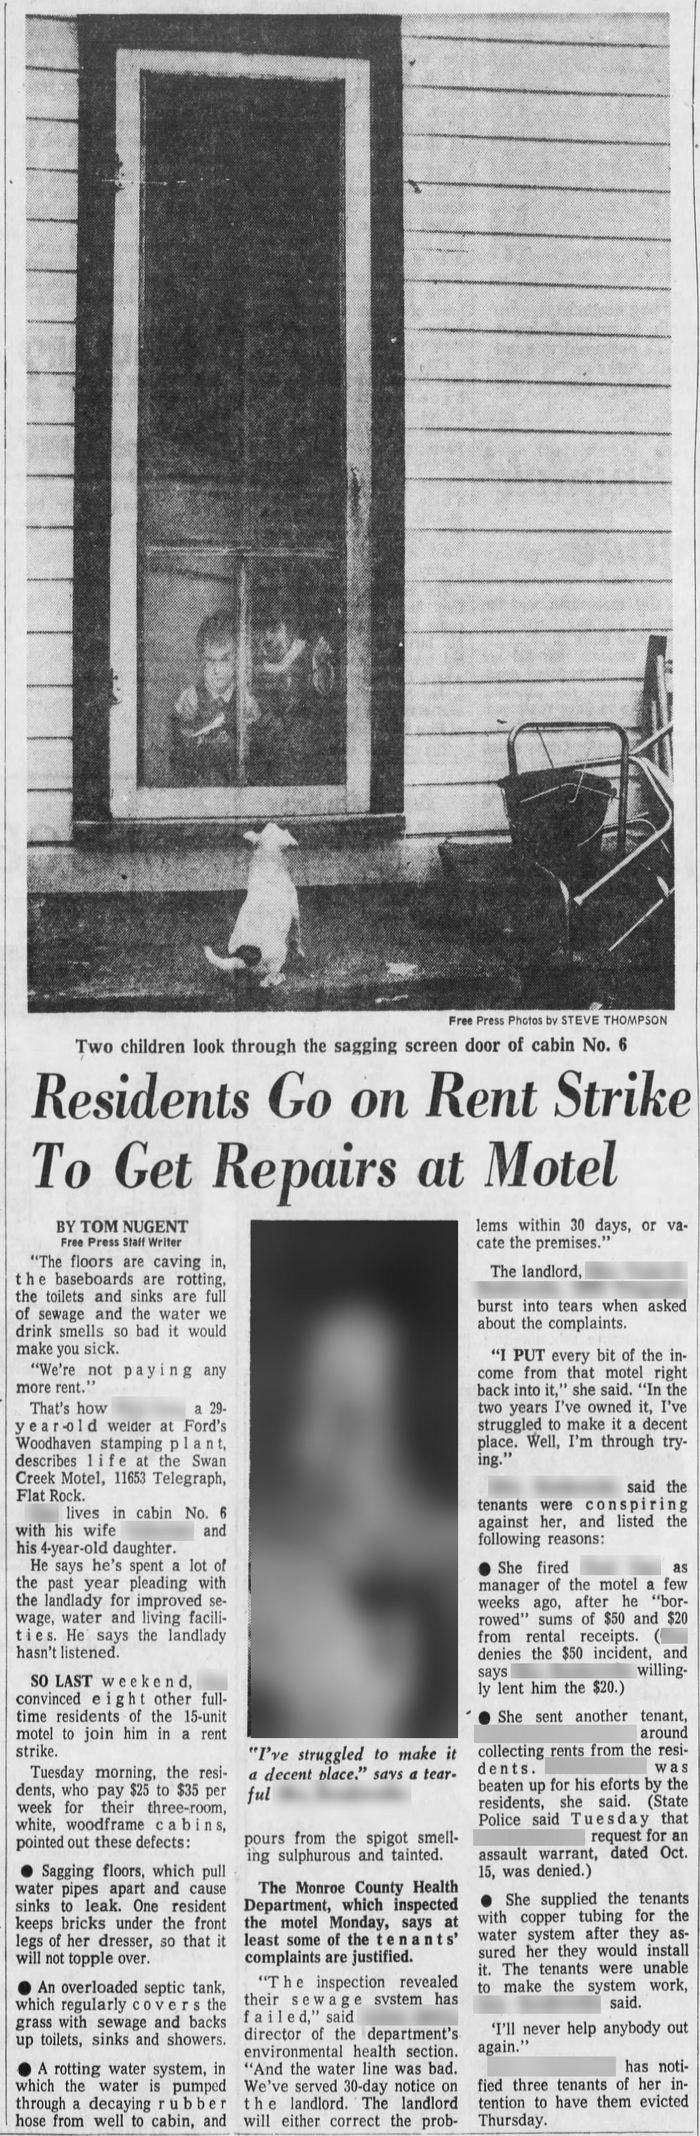 Swan Creek Motel - Oct 21 1970 Building Issues